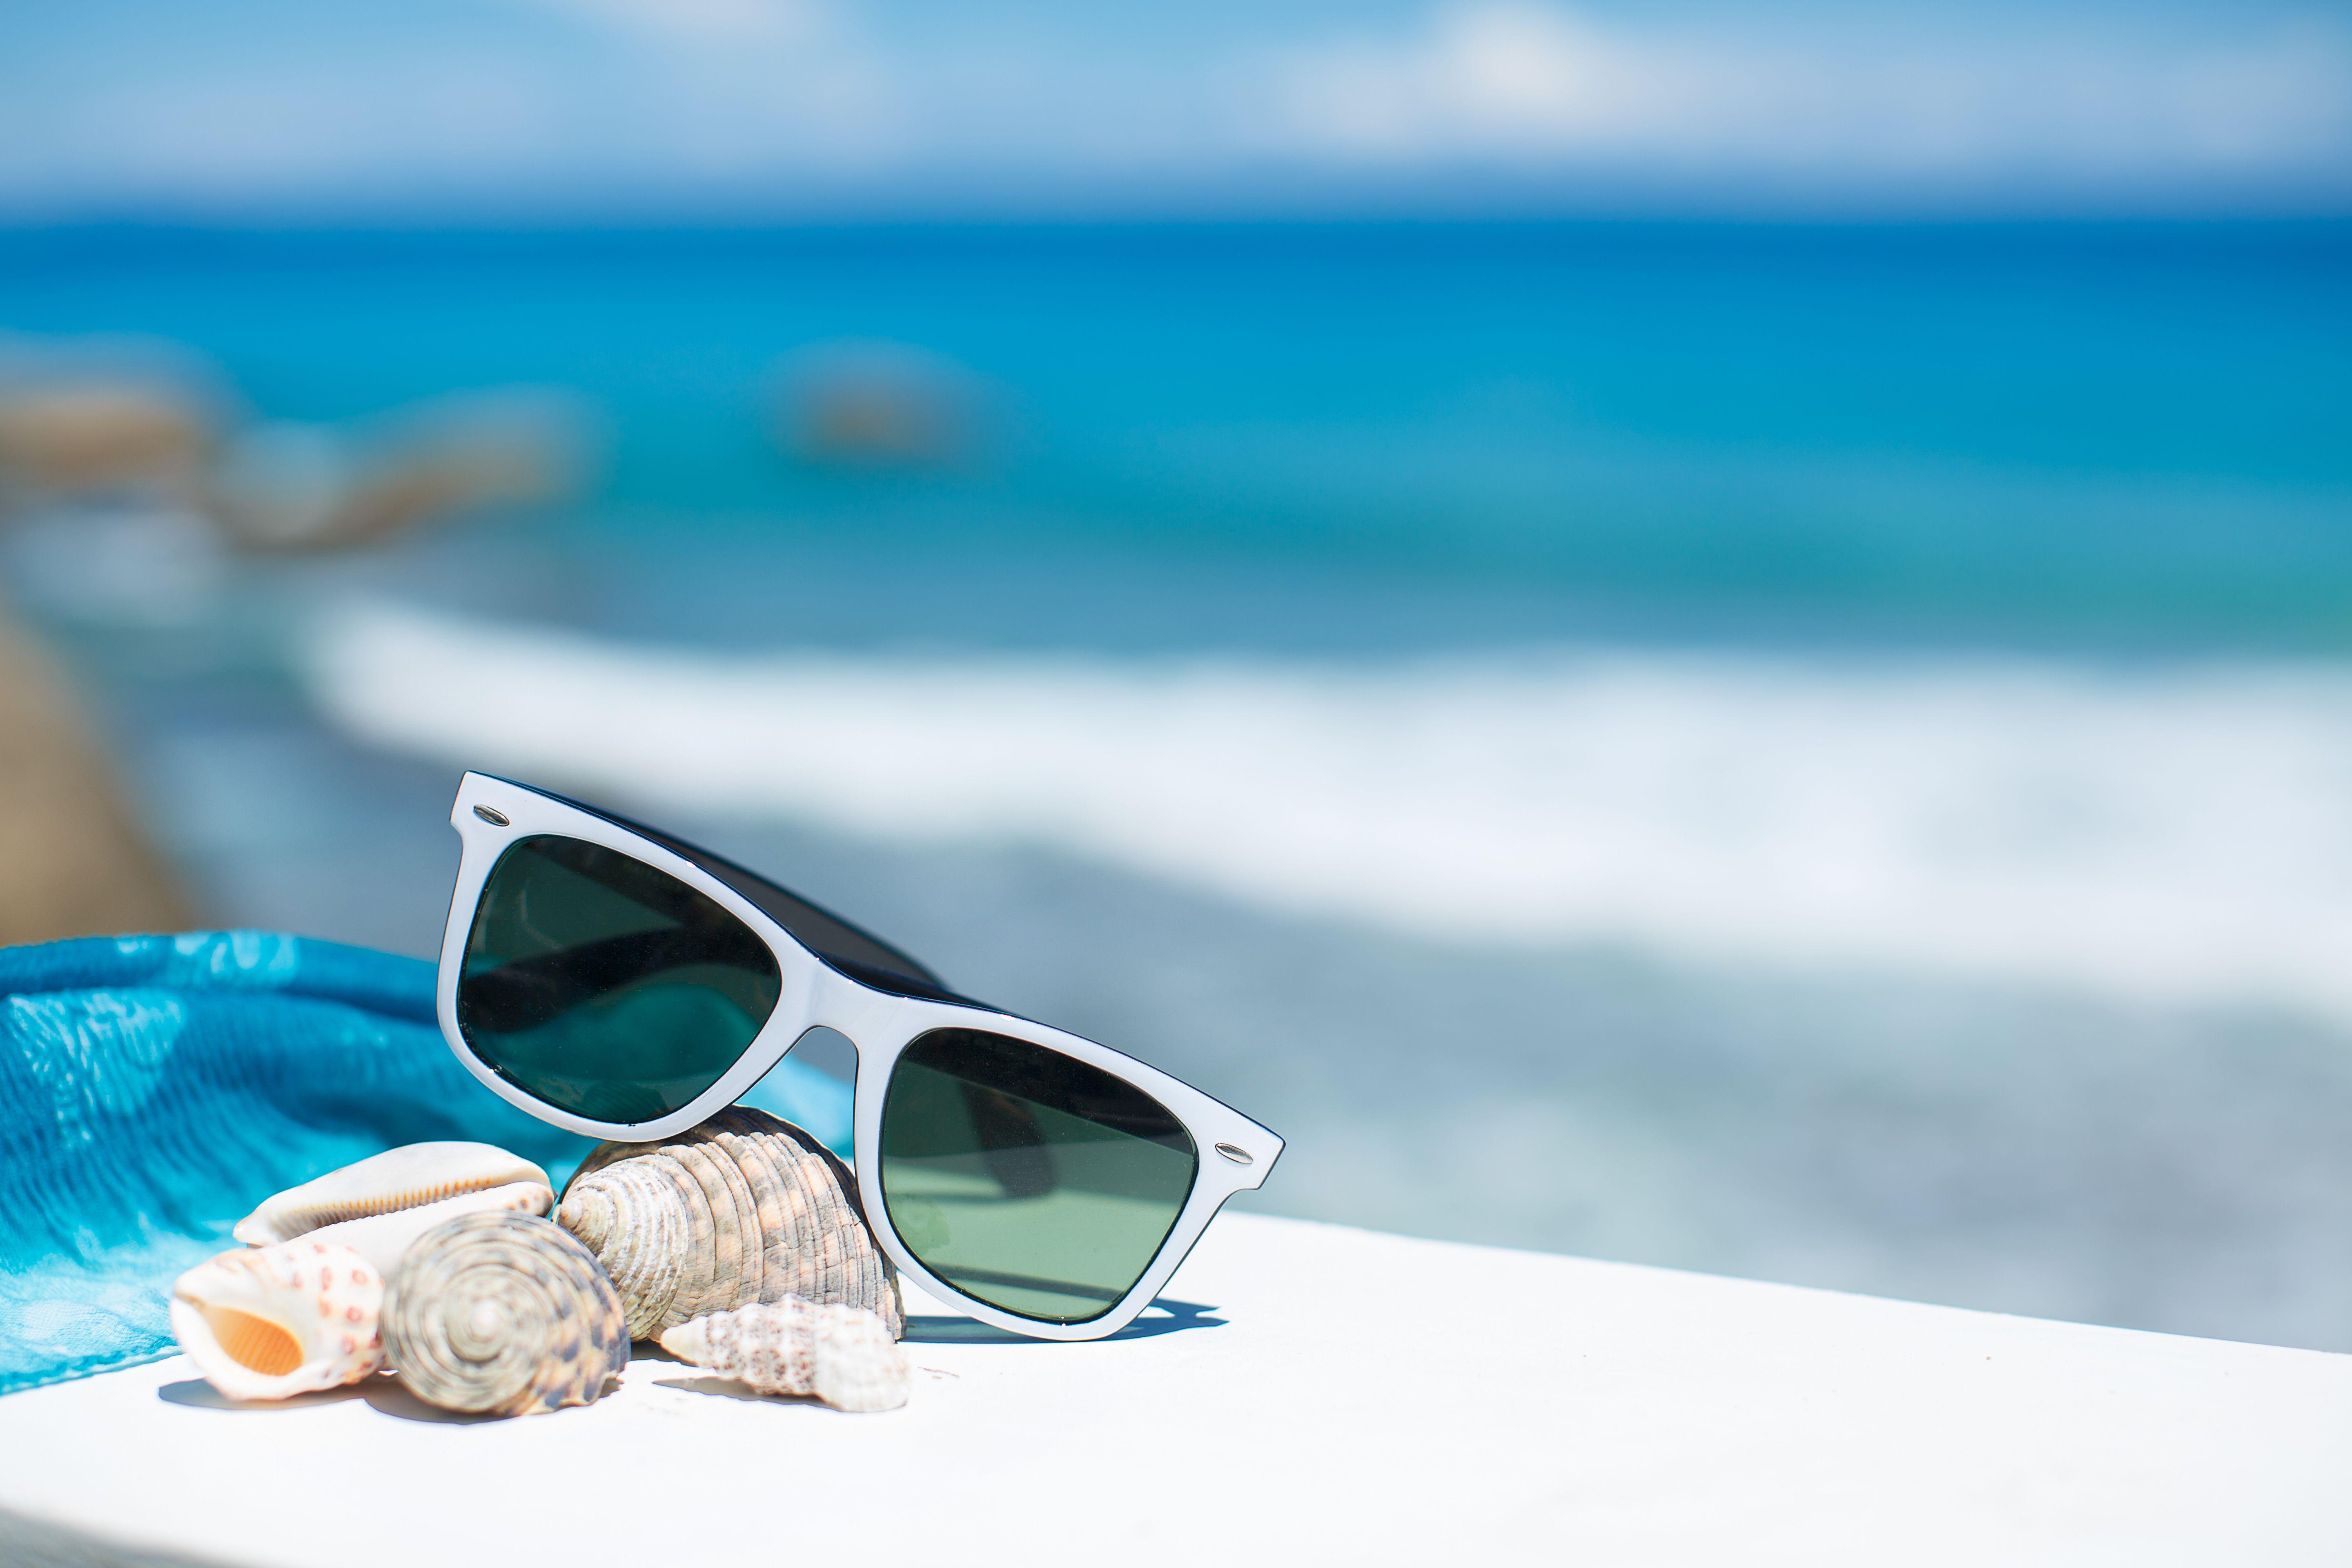 Beach Sunglasses Wallpapers Top Free Beach Sunglasses Backgrounds Wallpaperaccess